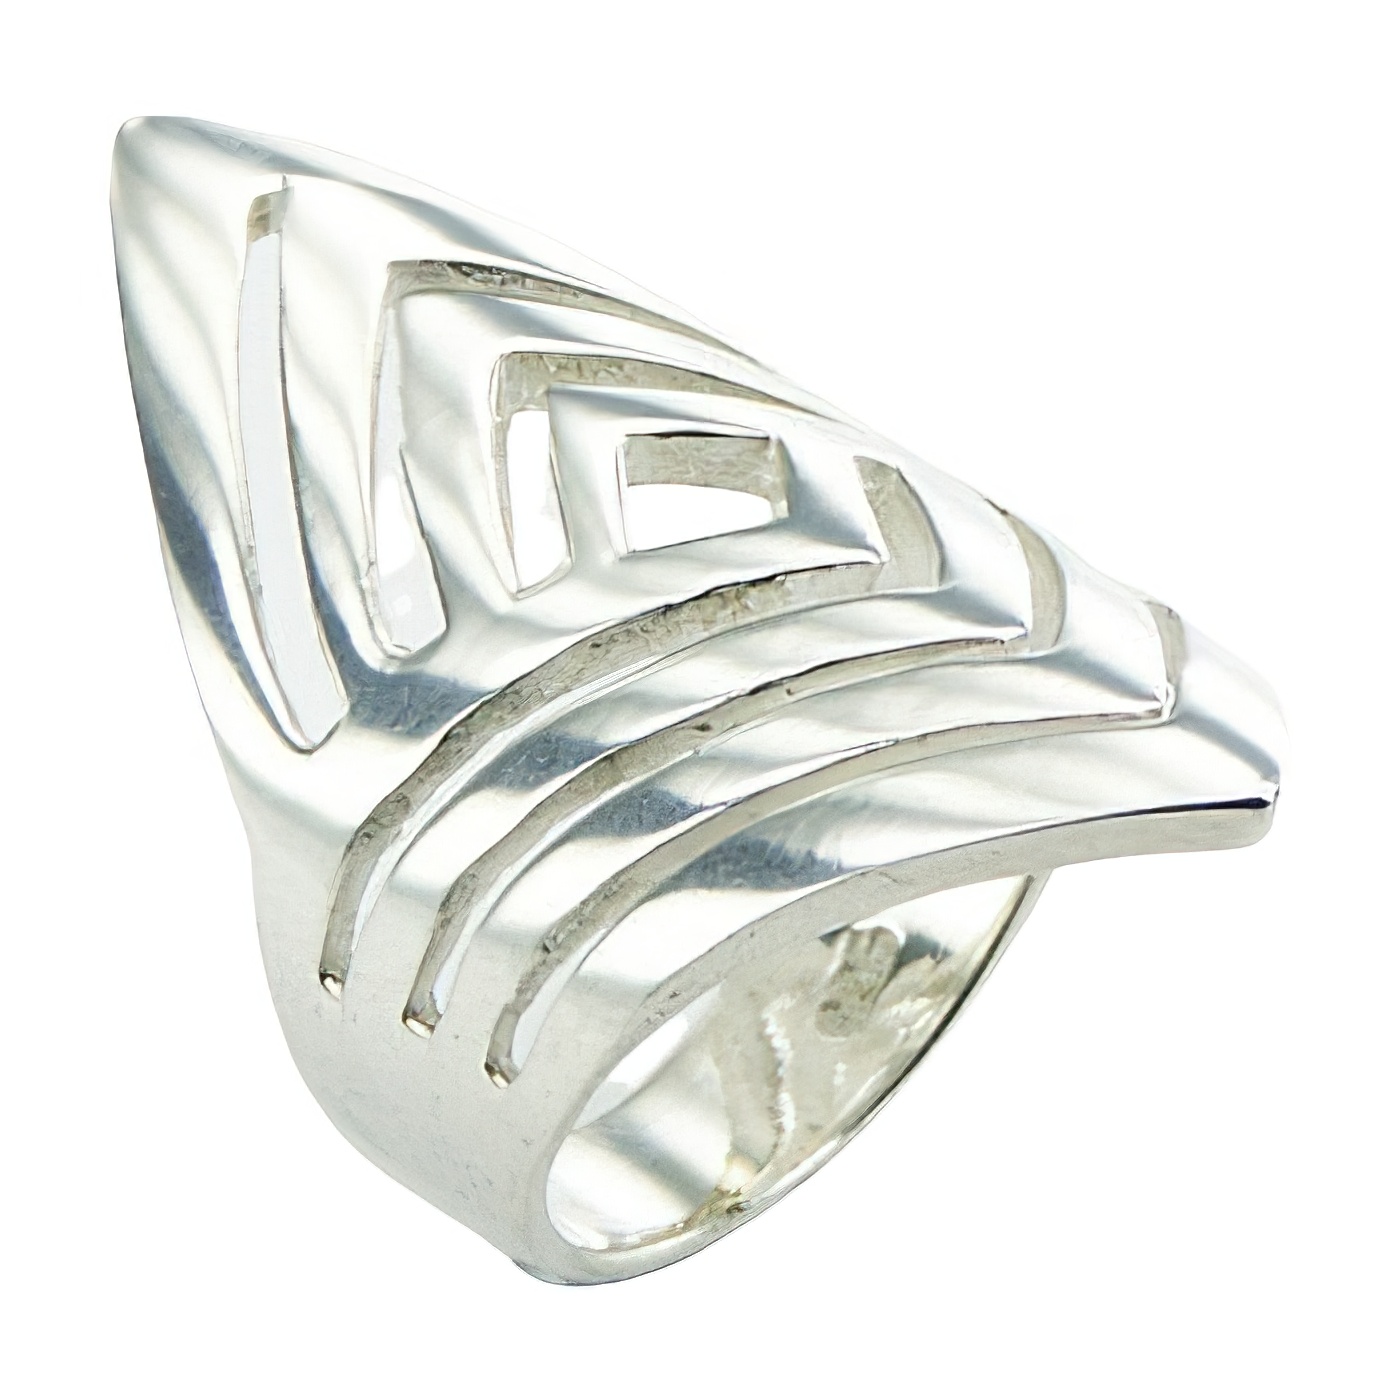 Stylish Open Diamond Shaped Openwork Silver Designer Ring by BeYindi 